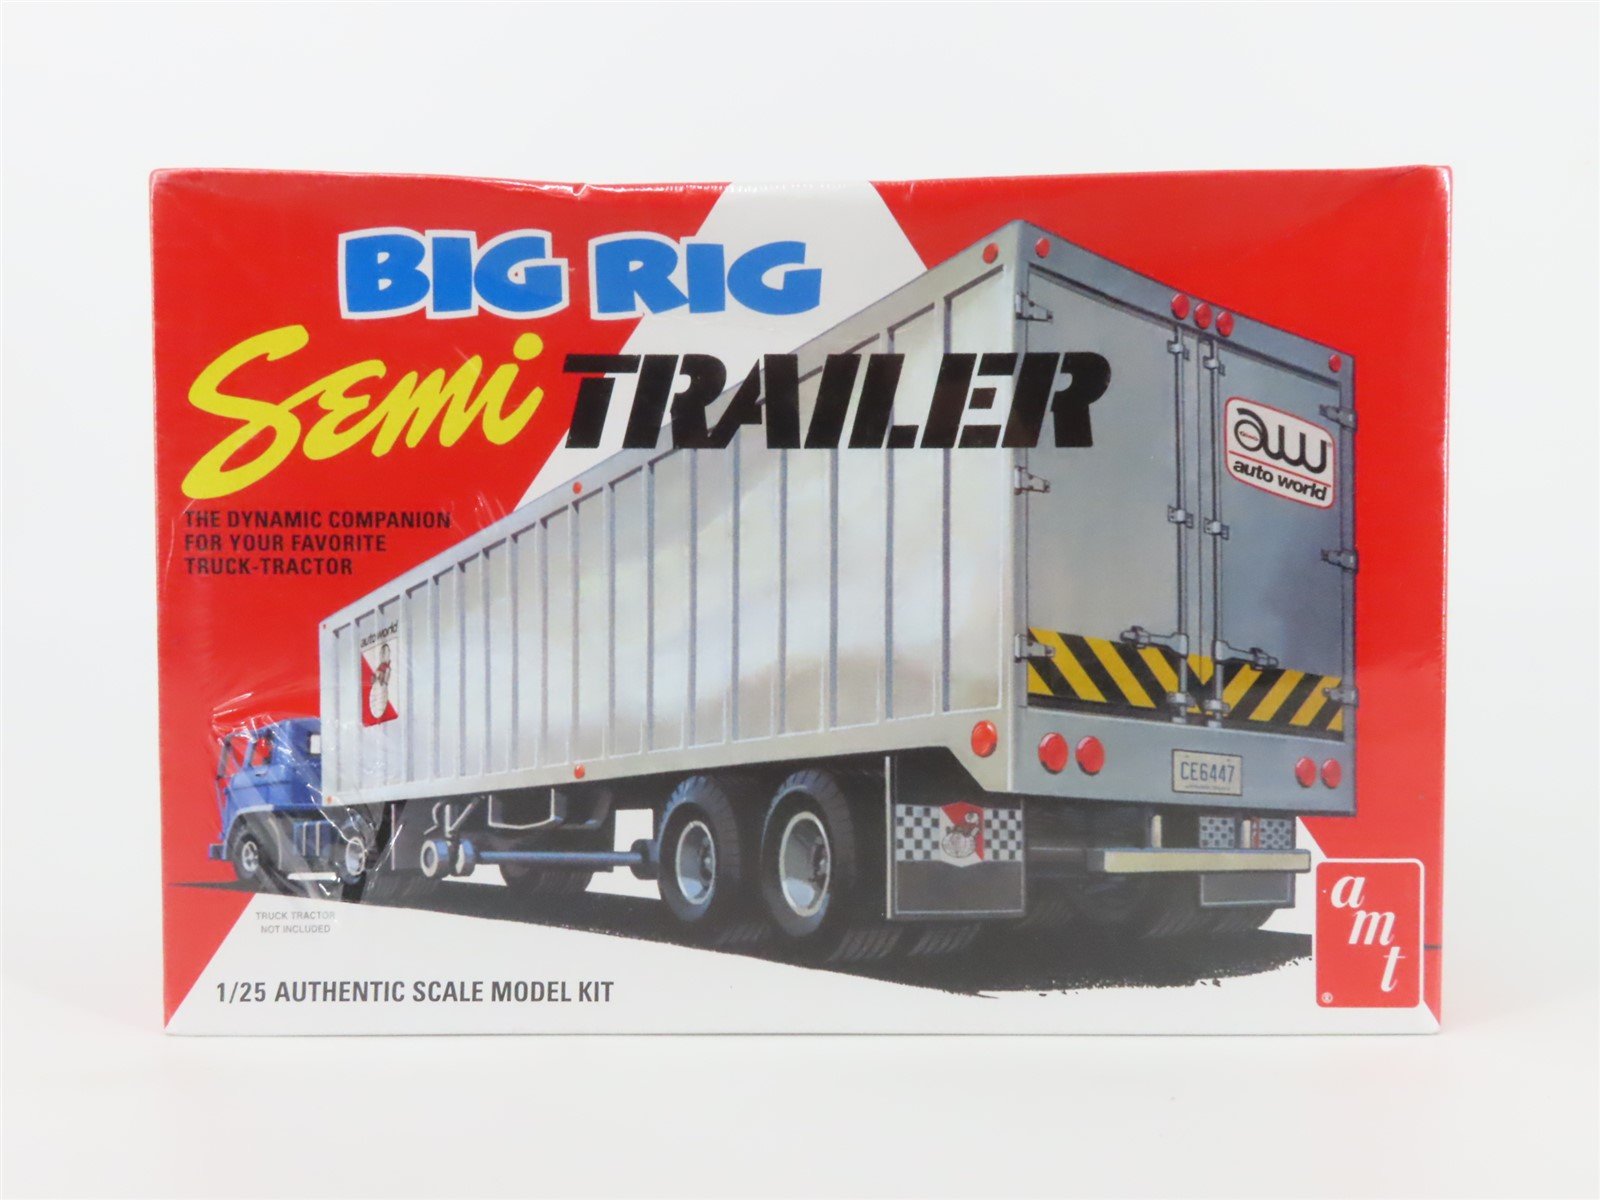 1:25 Scale AMT 1164/06 Big Rig Semi Trailer Kit - Sealed